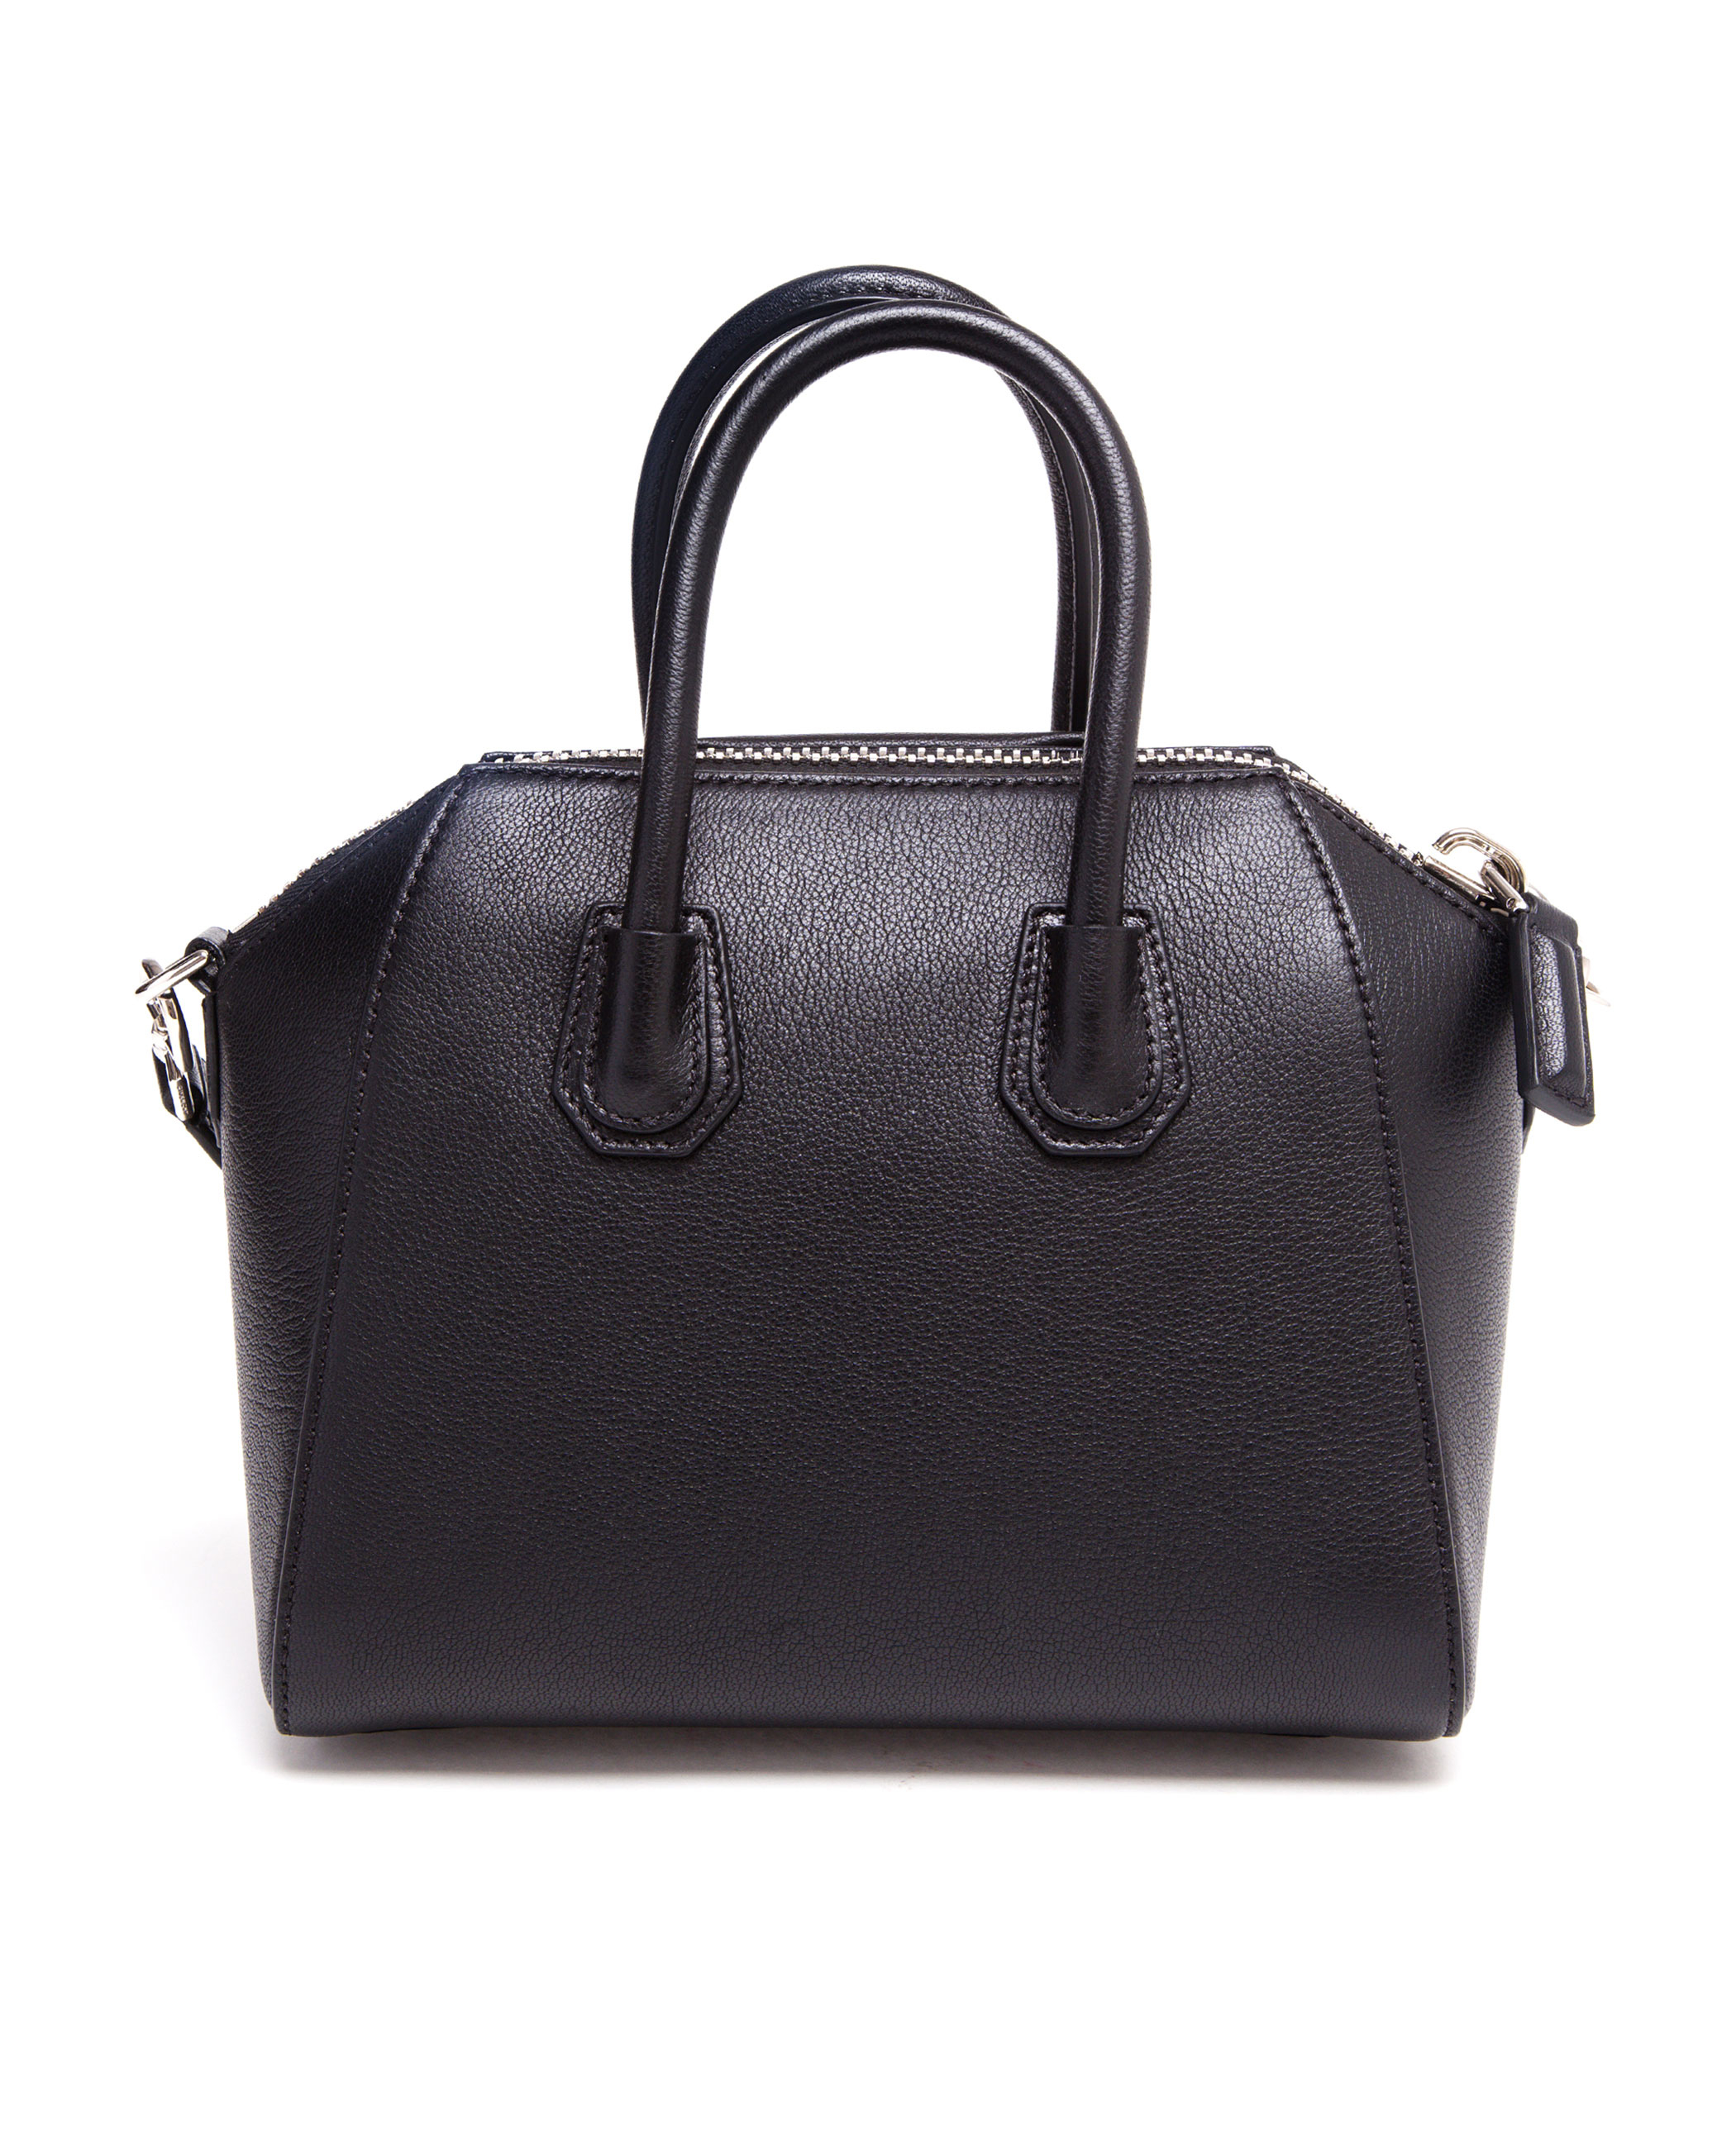 Givenchy Mini Antigona Grained Leather Shoulder Bag in Black | Lyst